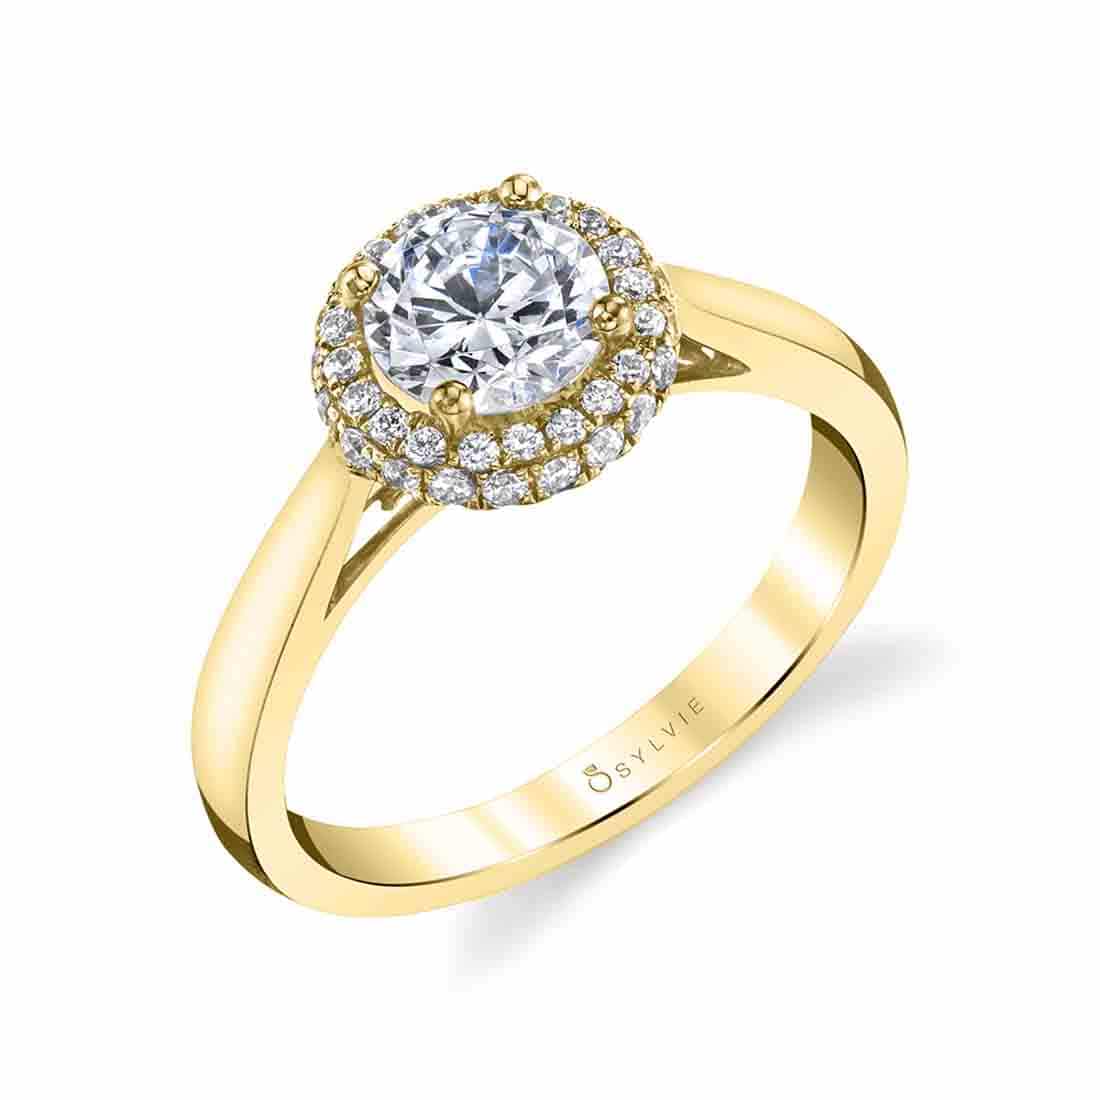 Halo Engagement Ring with Shiny Shank